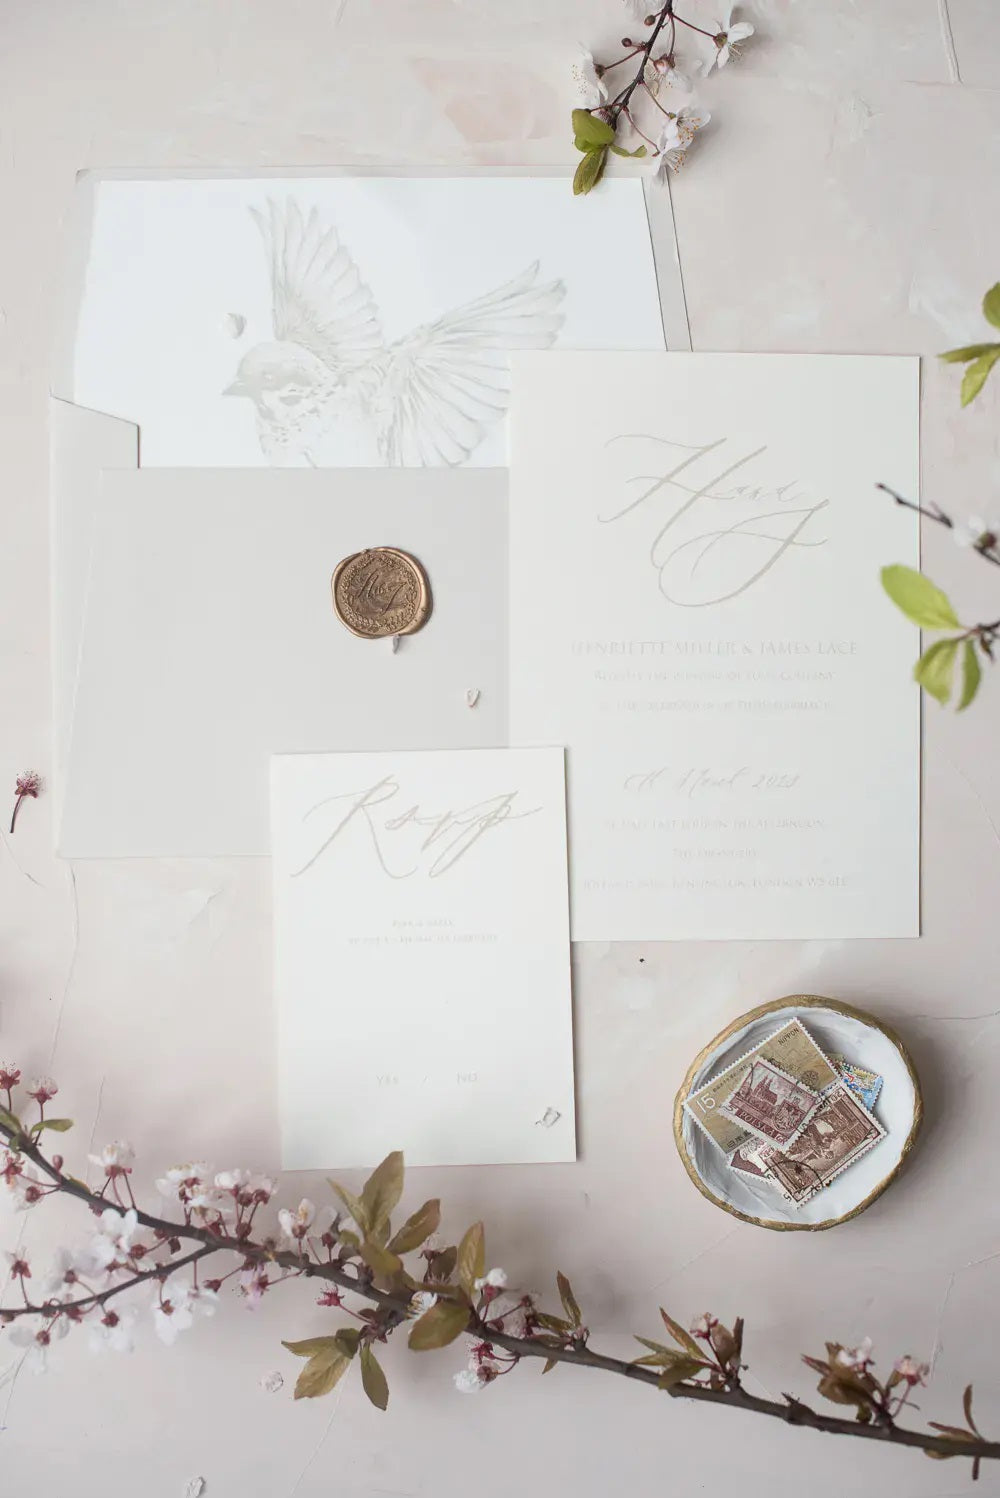 Wedding invitations and other memorabilia